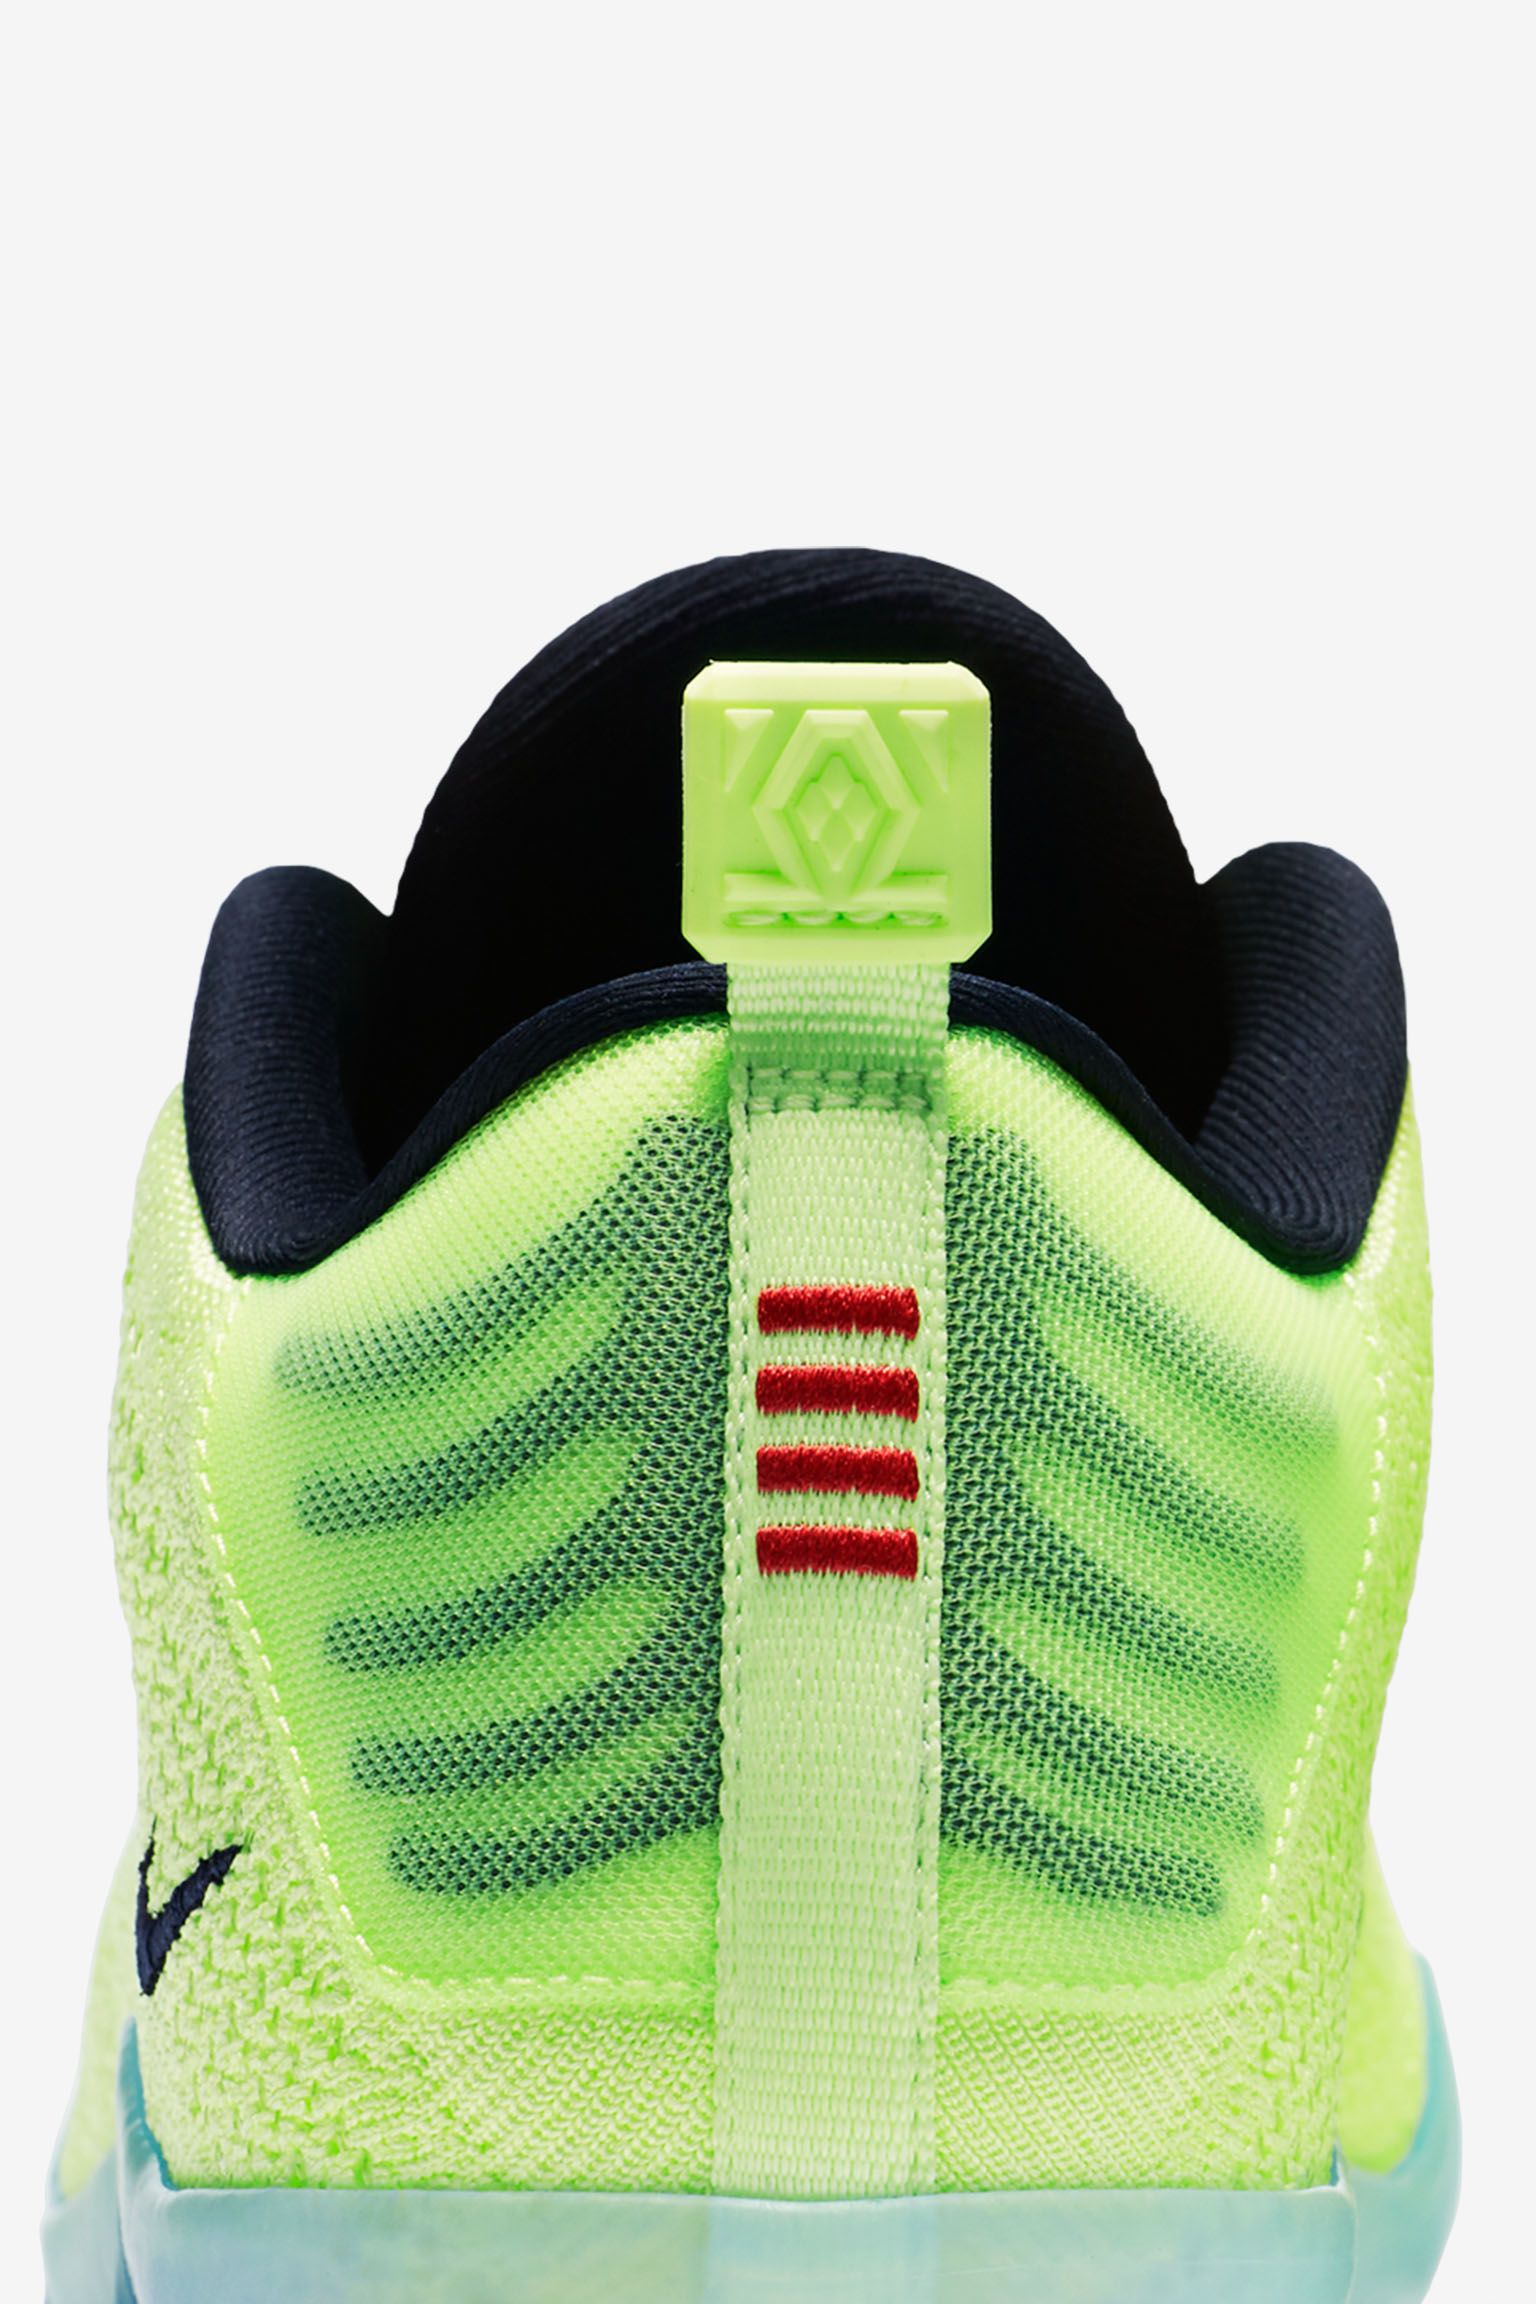 Nike Kobe 11 Elite Low 4KB 'Liquid Lime'. SNKRS GB